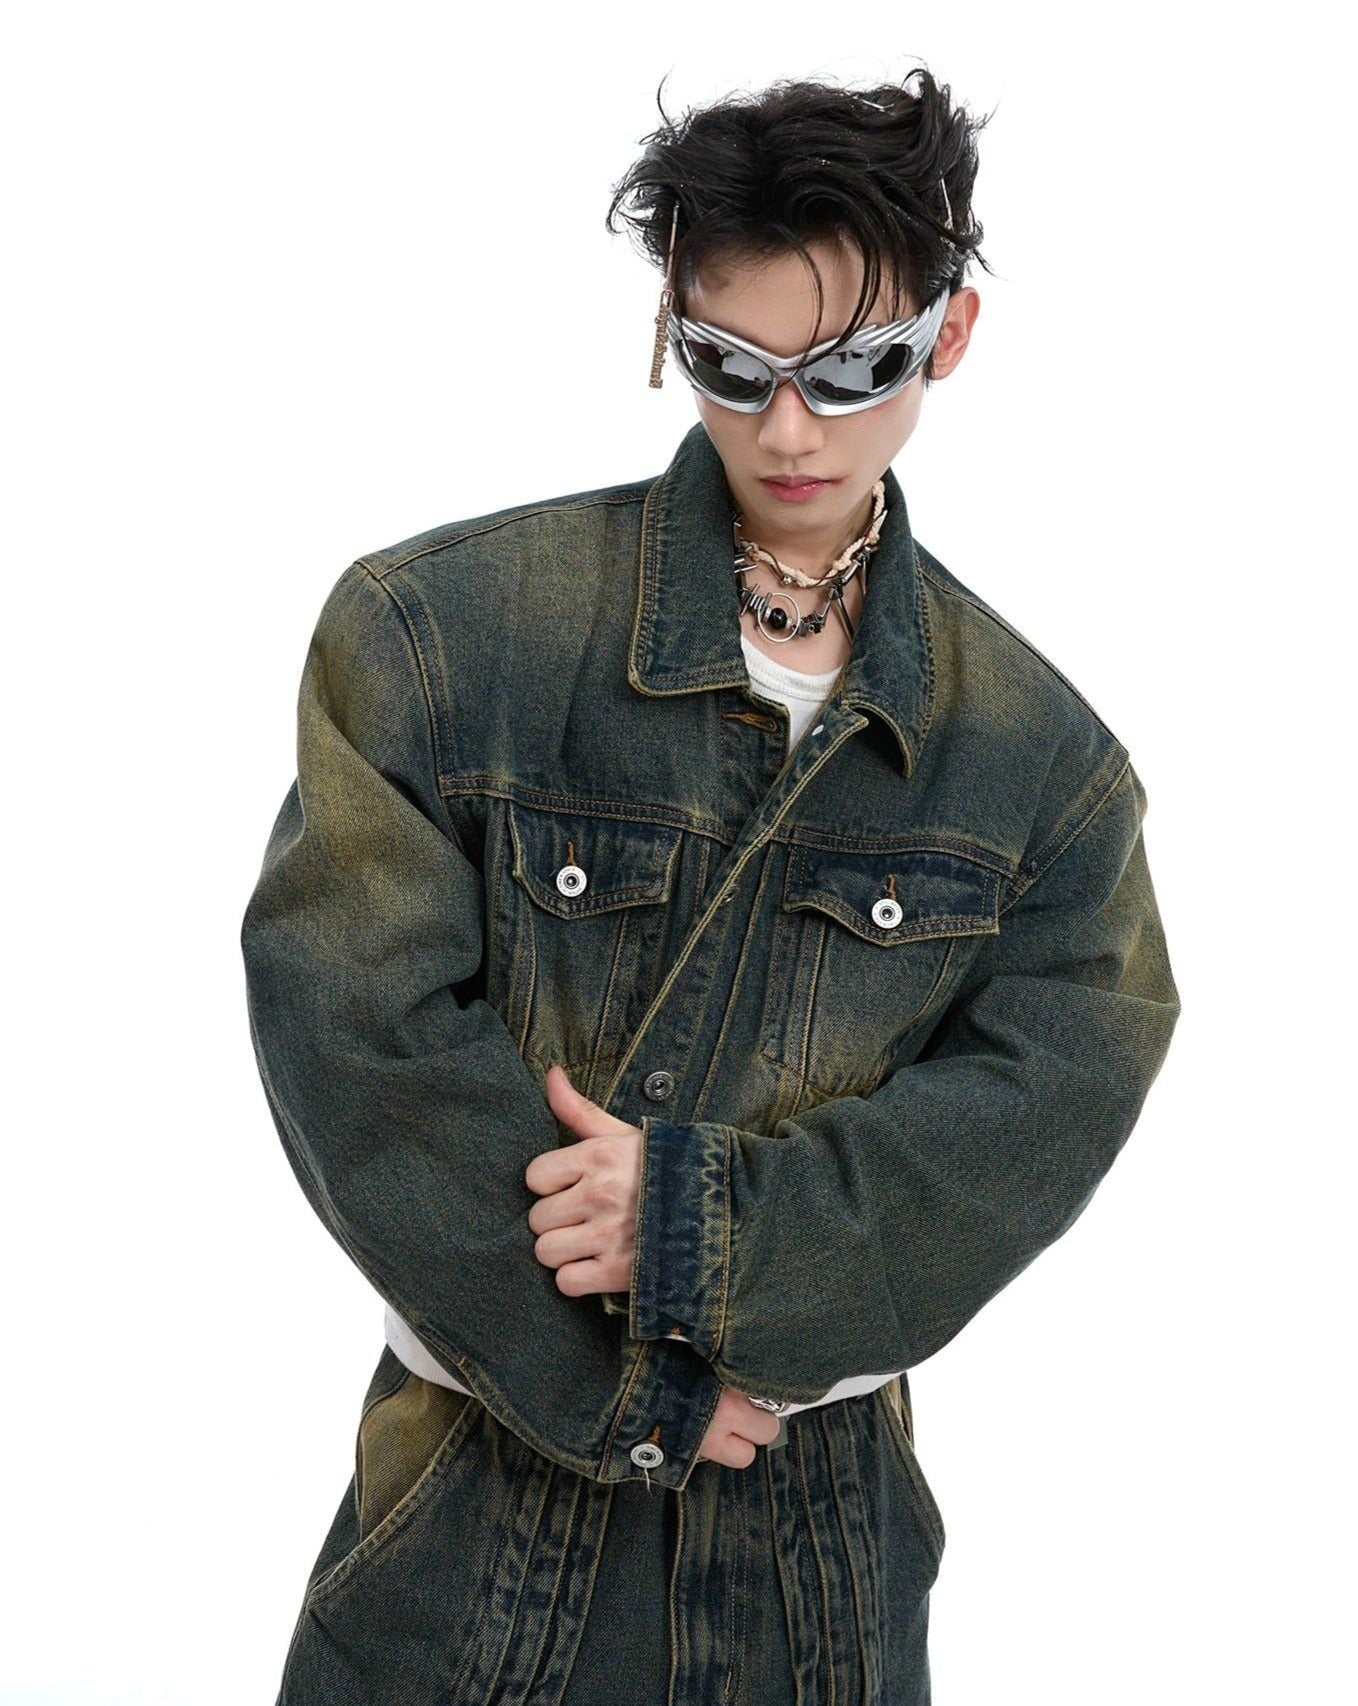 Cropped Buttoned Denim Jacket Korean Street Fashion Jacket By Argue Culture Shop Online at OH Vault